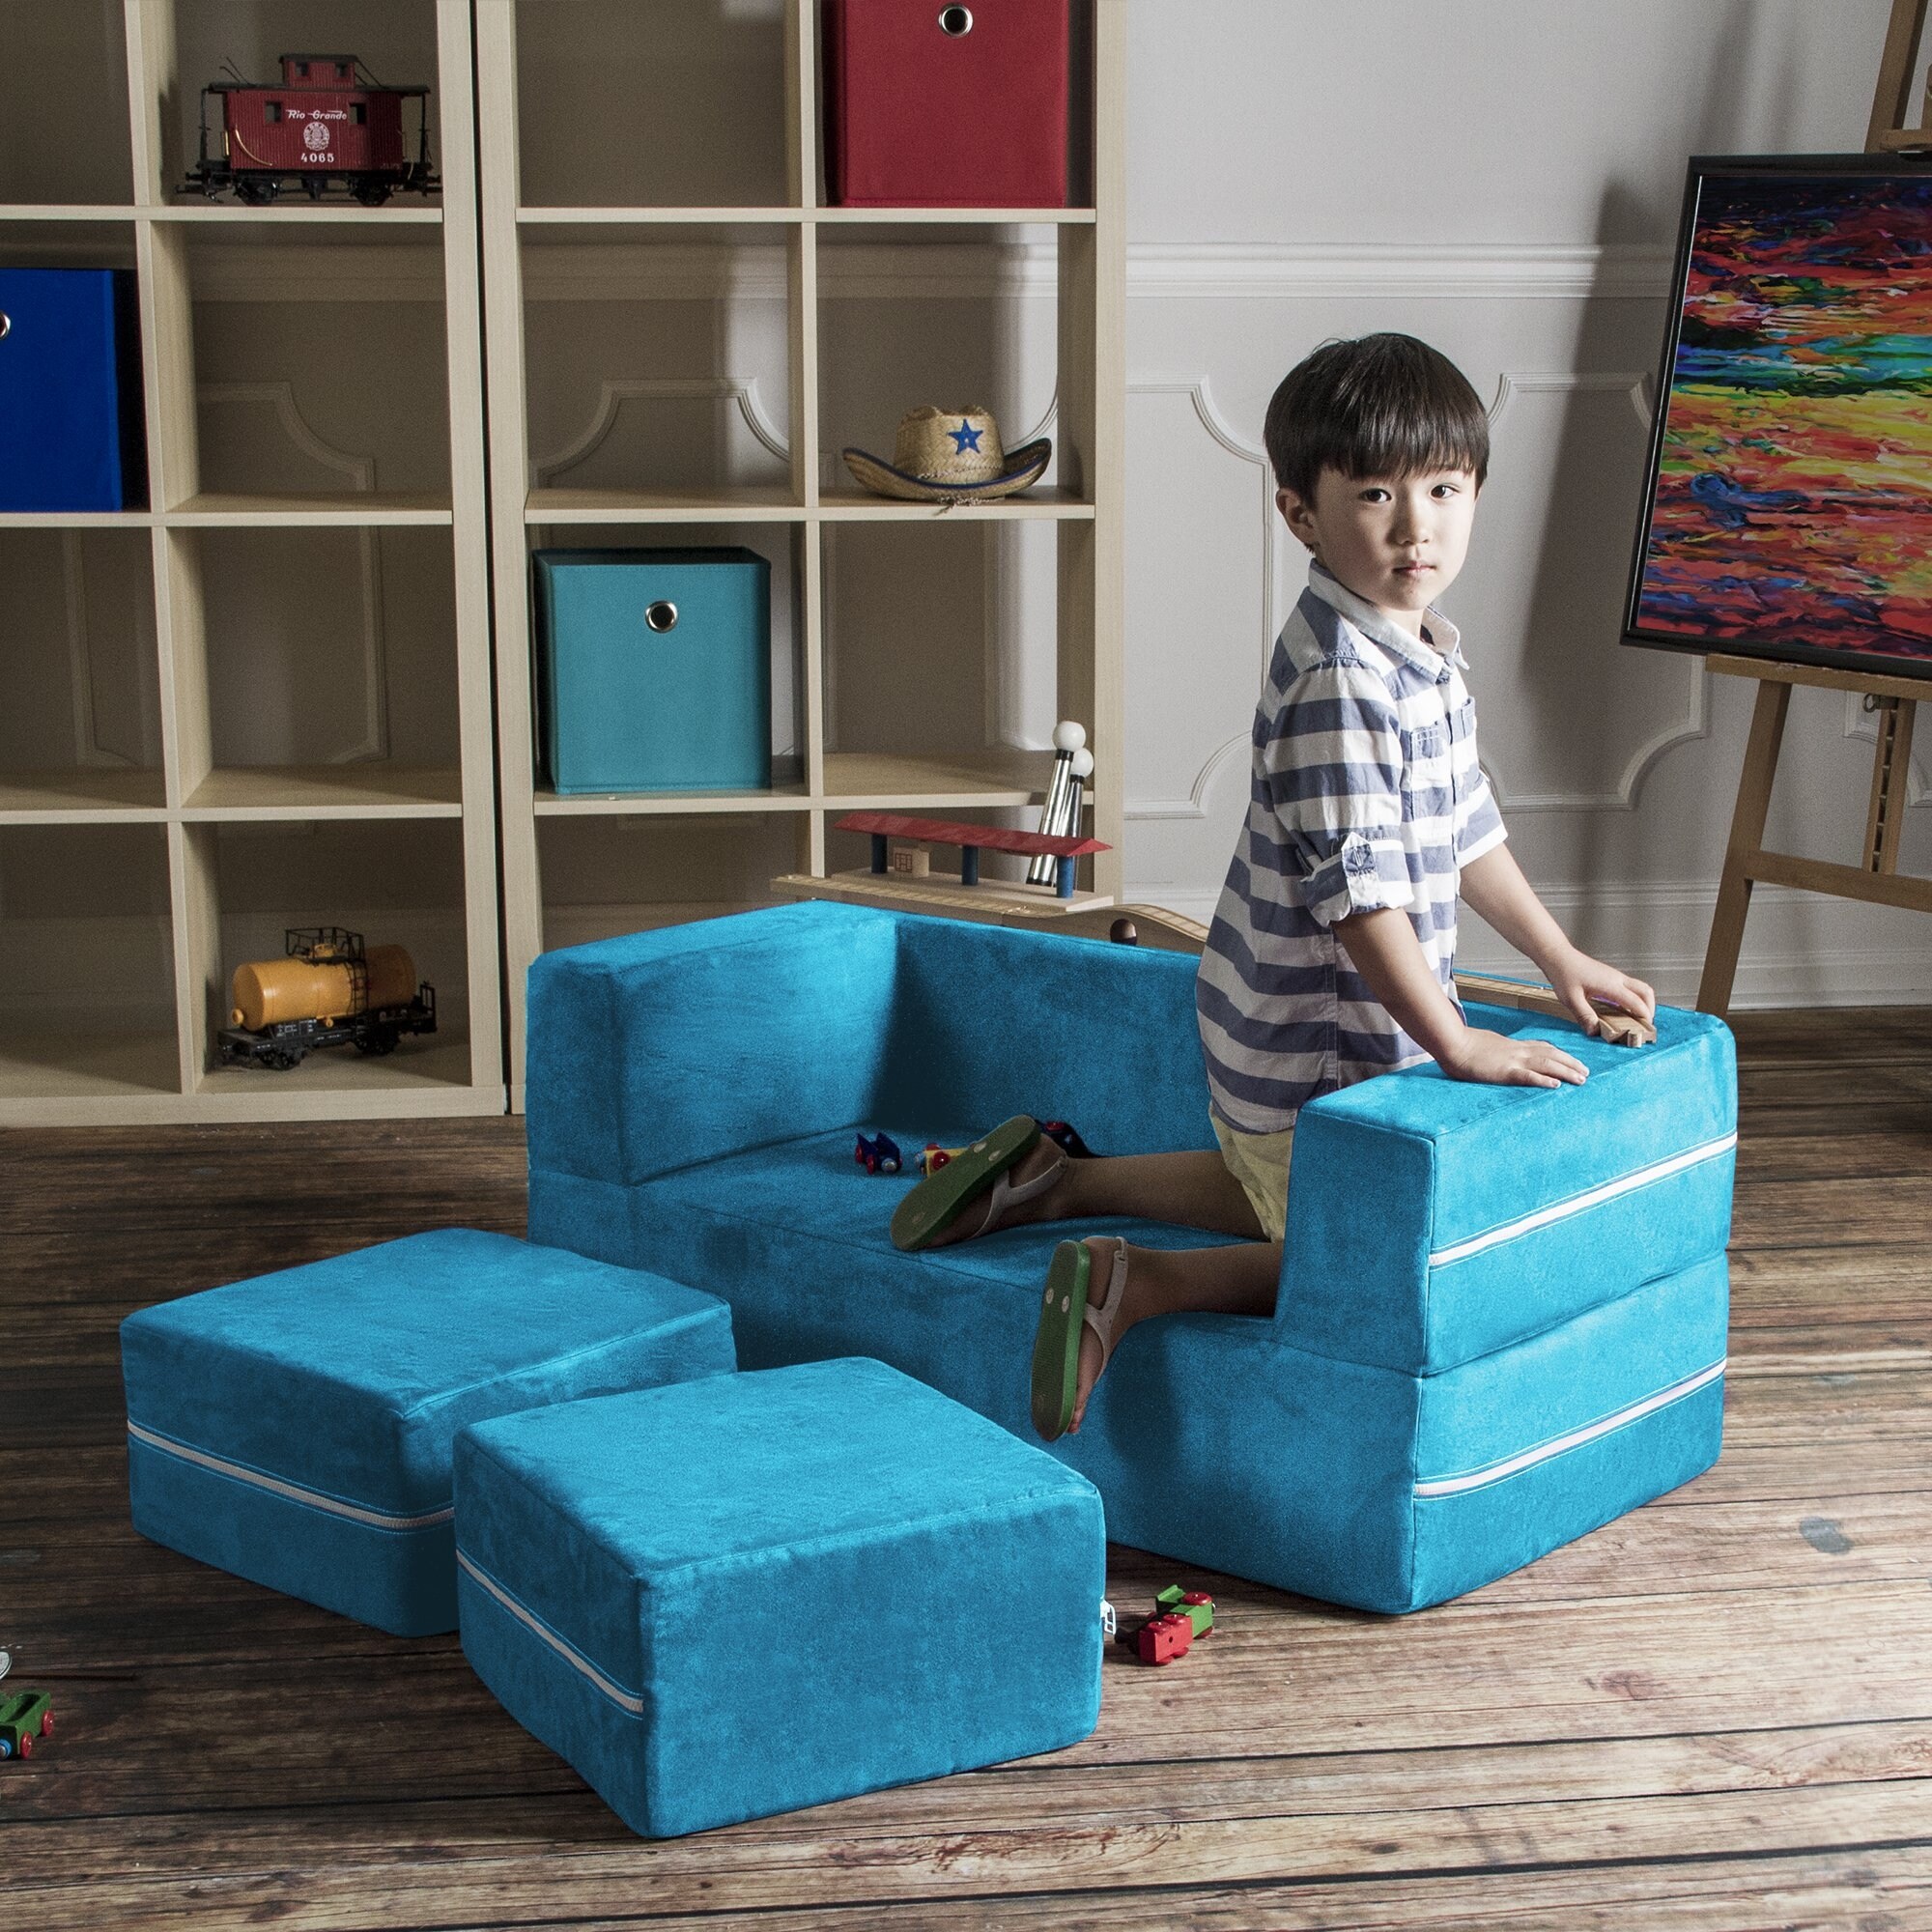 Jaxx Zipline Playscape - Imaginative Furniture Playset for Creative Kids -  On Sale - Bed Bath & Beyond - 32848836